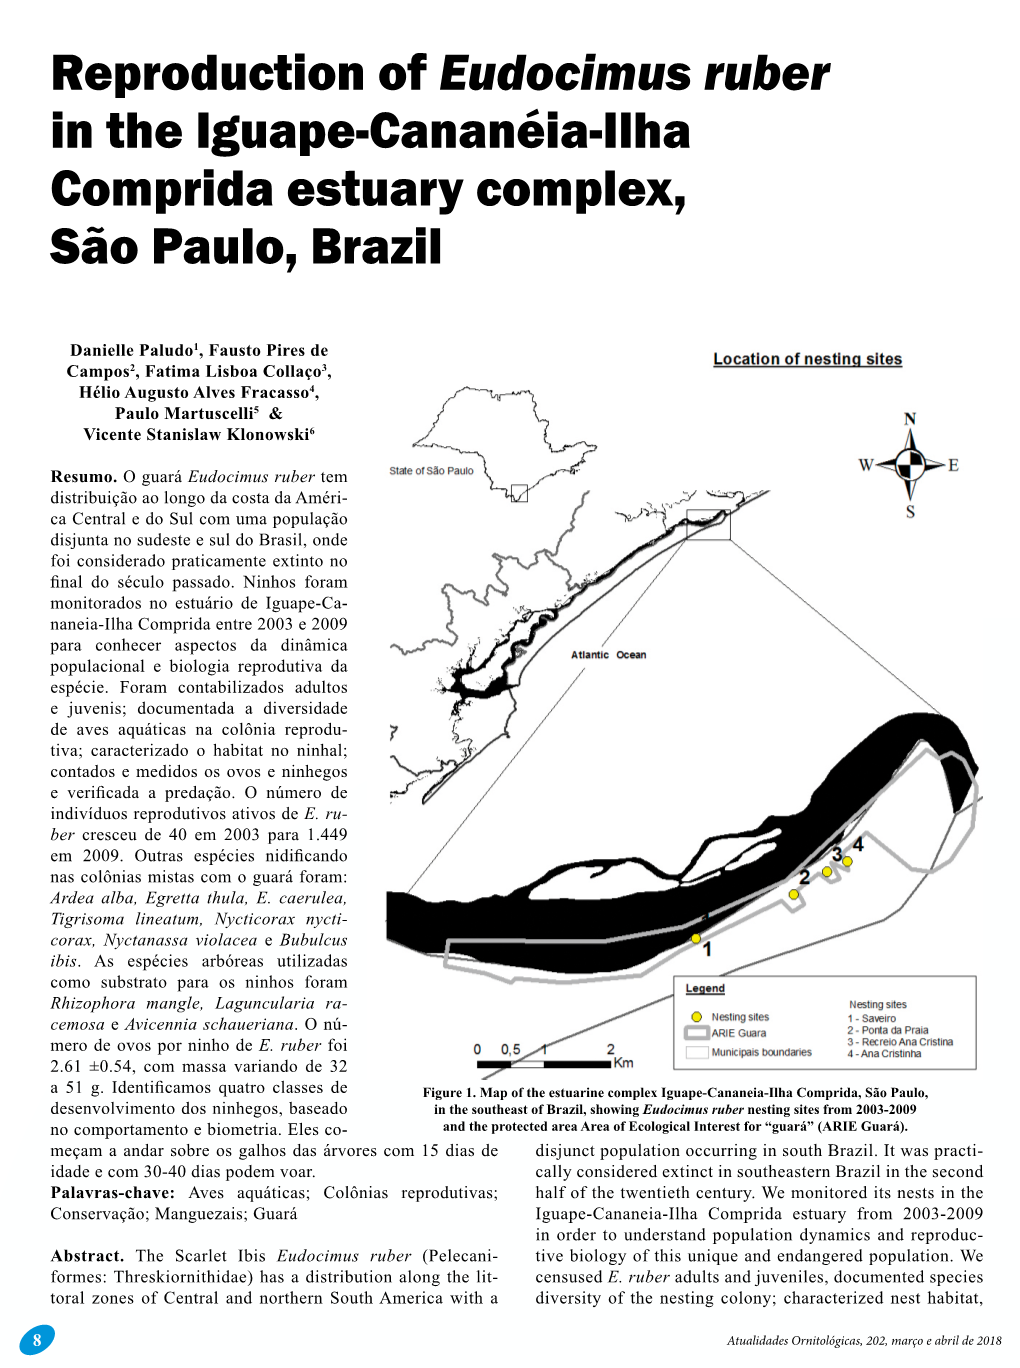 Reproduction of Eudocimus Ruber in the Iguape-Cananéia-Ilha Comprida Estuary Complex, São Paulo, Brazil